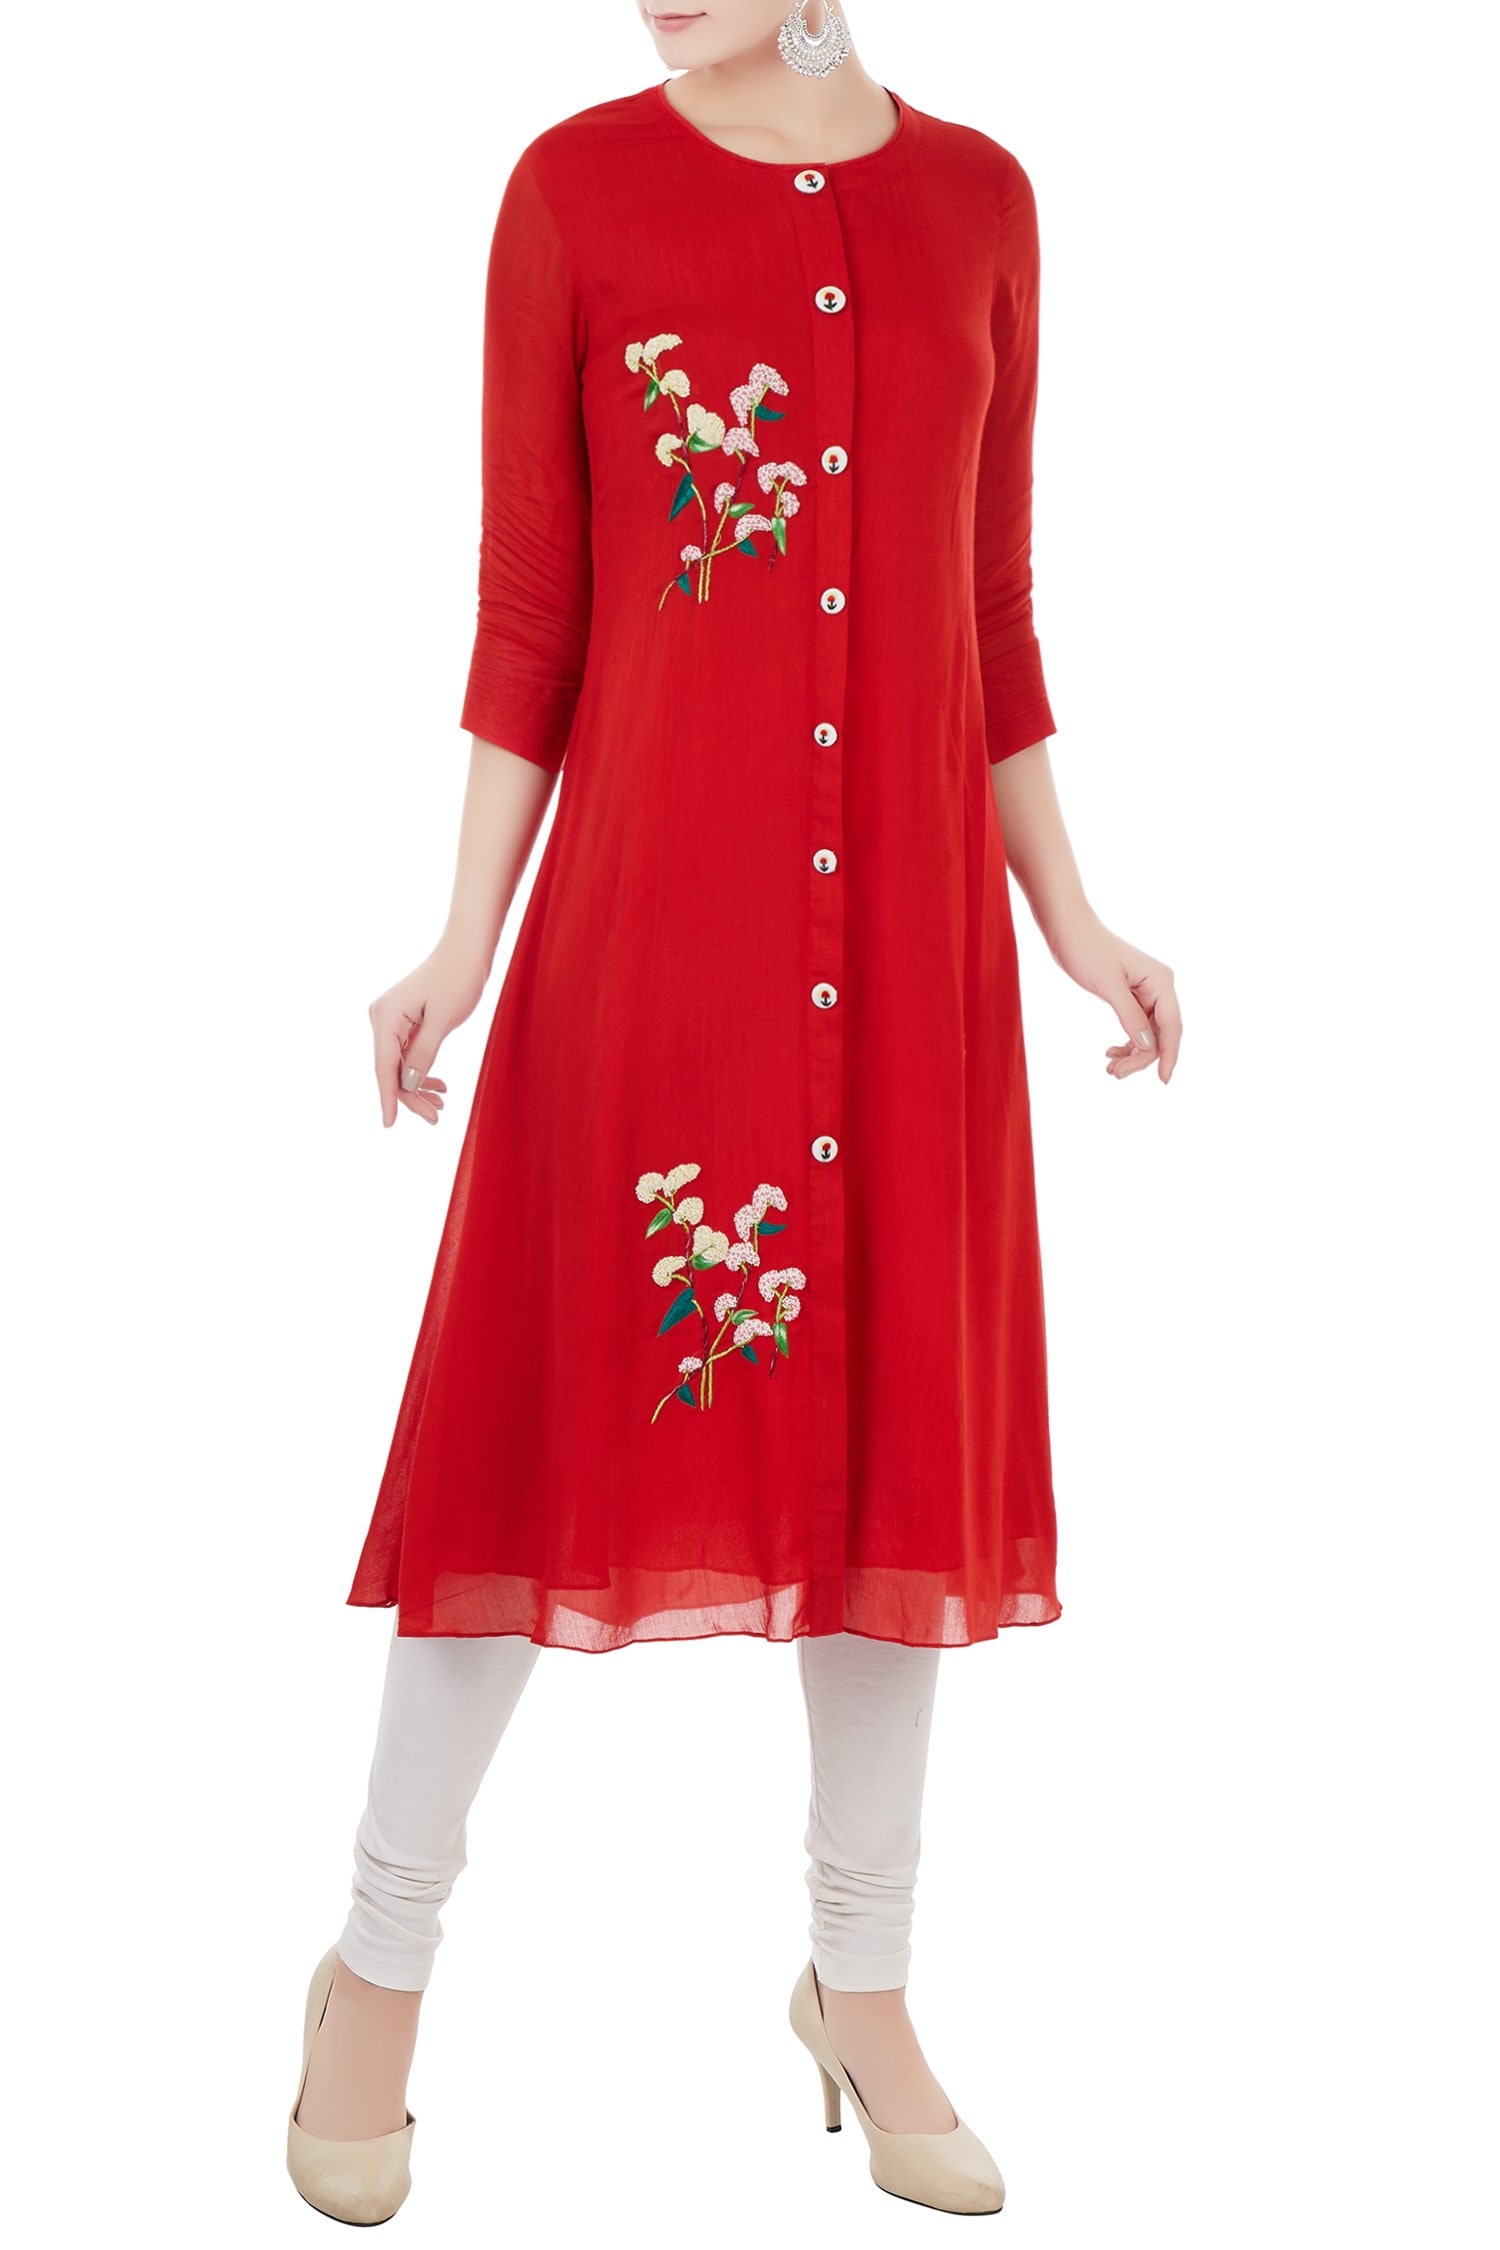 Desert Shine by Sulochana Jangir Red Linen Georgette Embroidered Floral Jewel Neck Kurta For Women